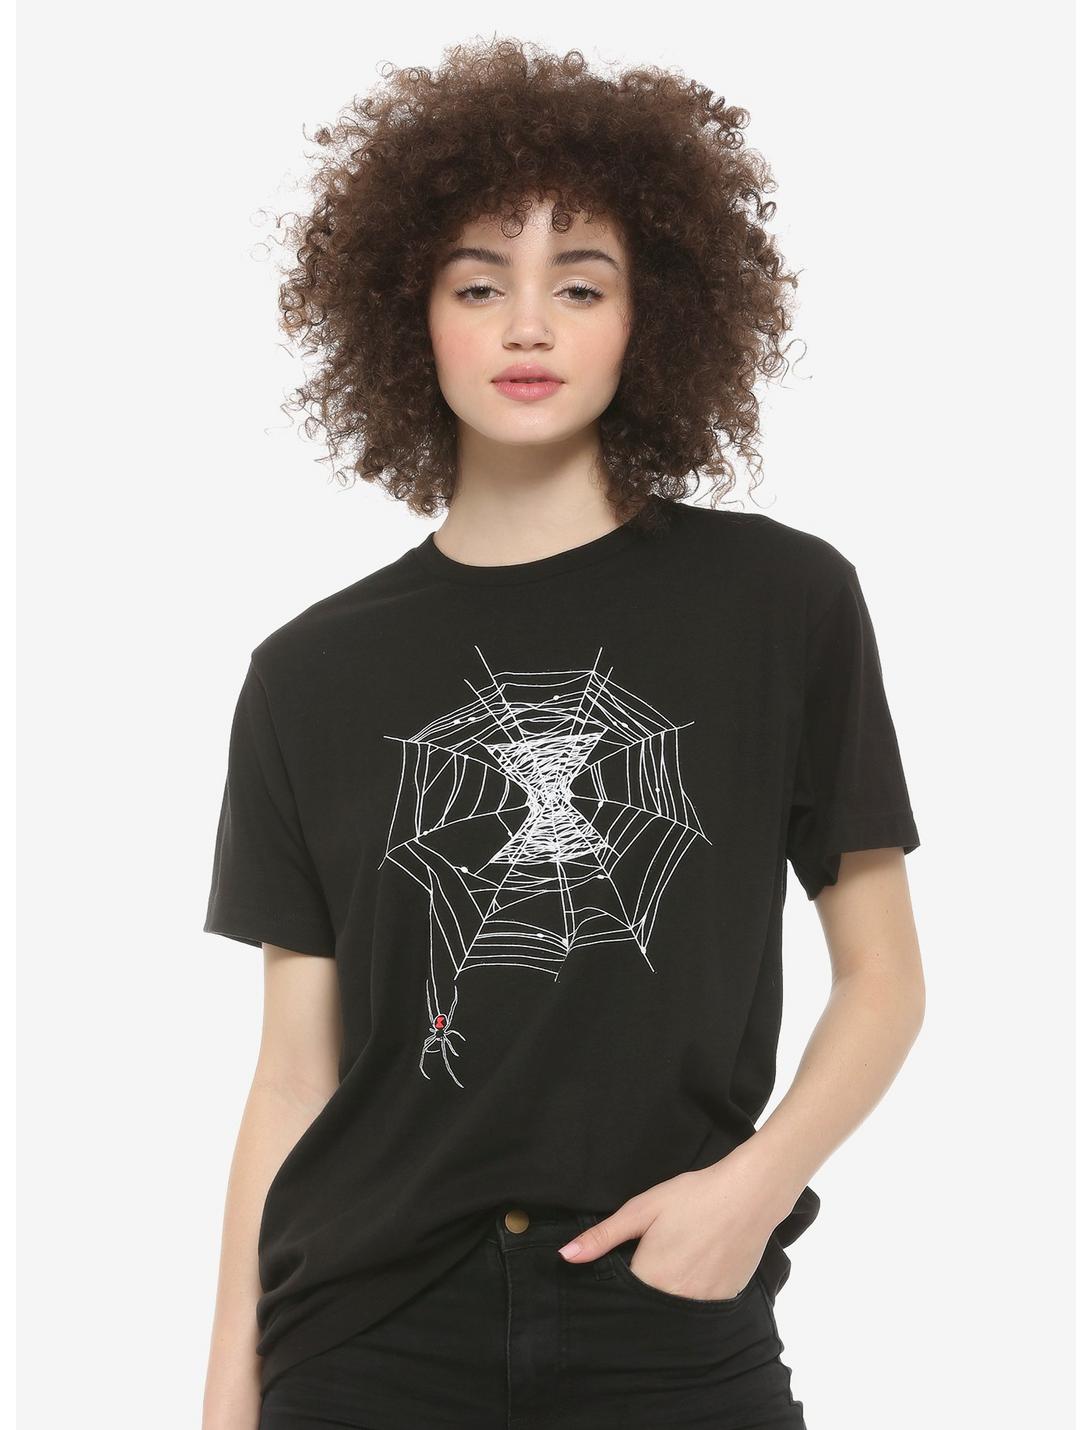 Marvel Black Widow Girls T-Shirt | Hot Topic